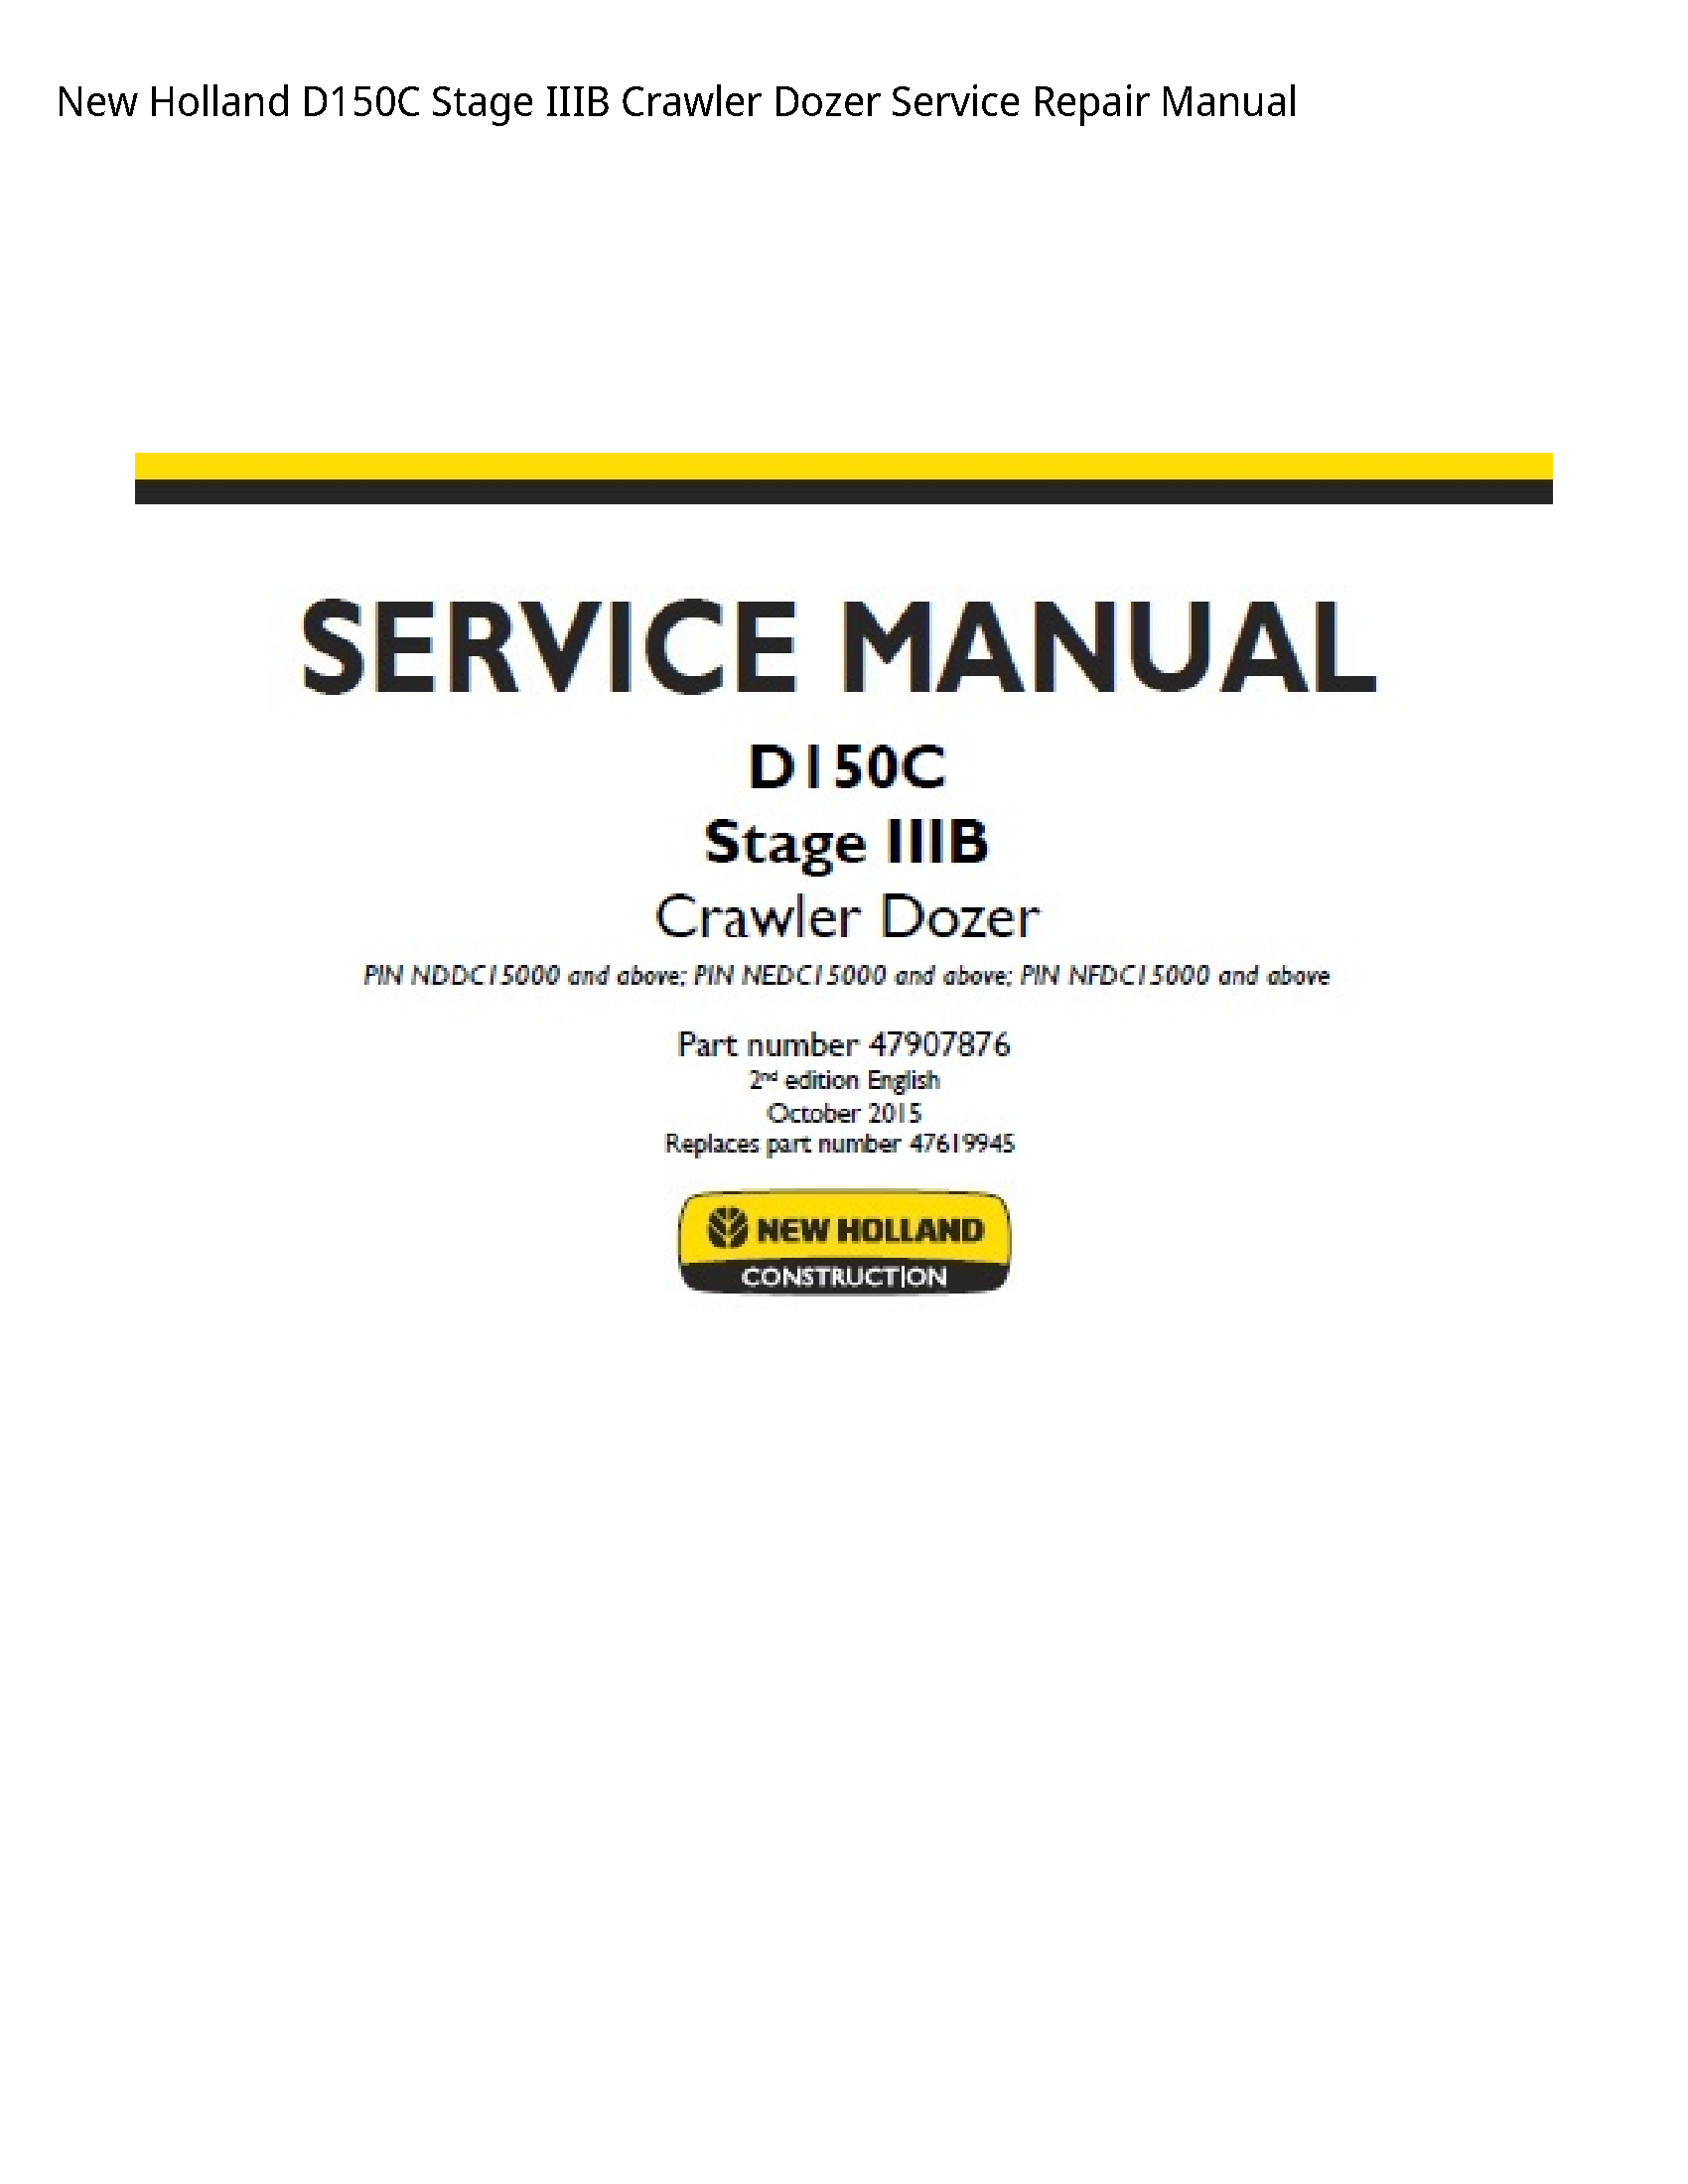 New Holland D150C Stage IIIB Crawler Dozer manual